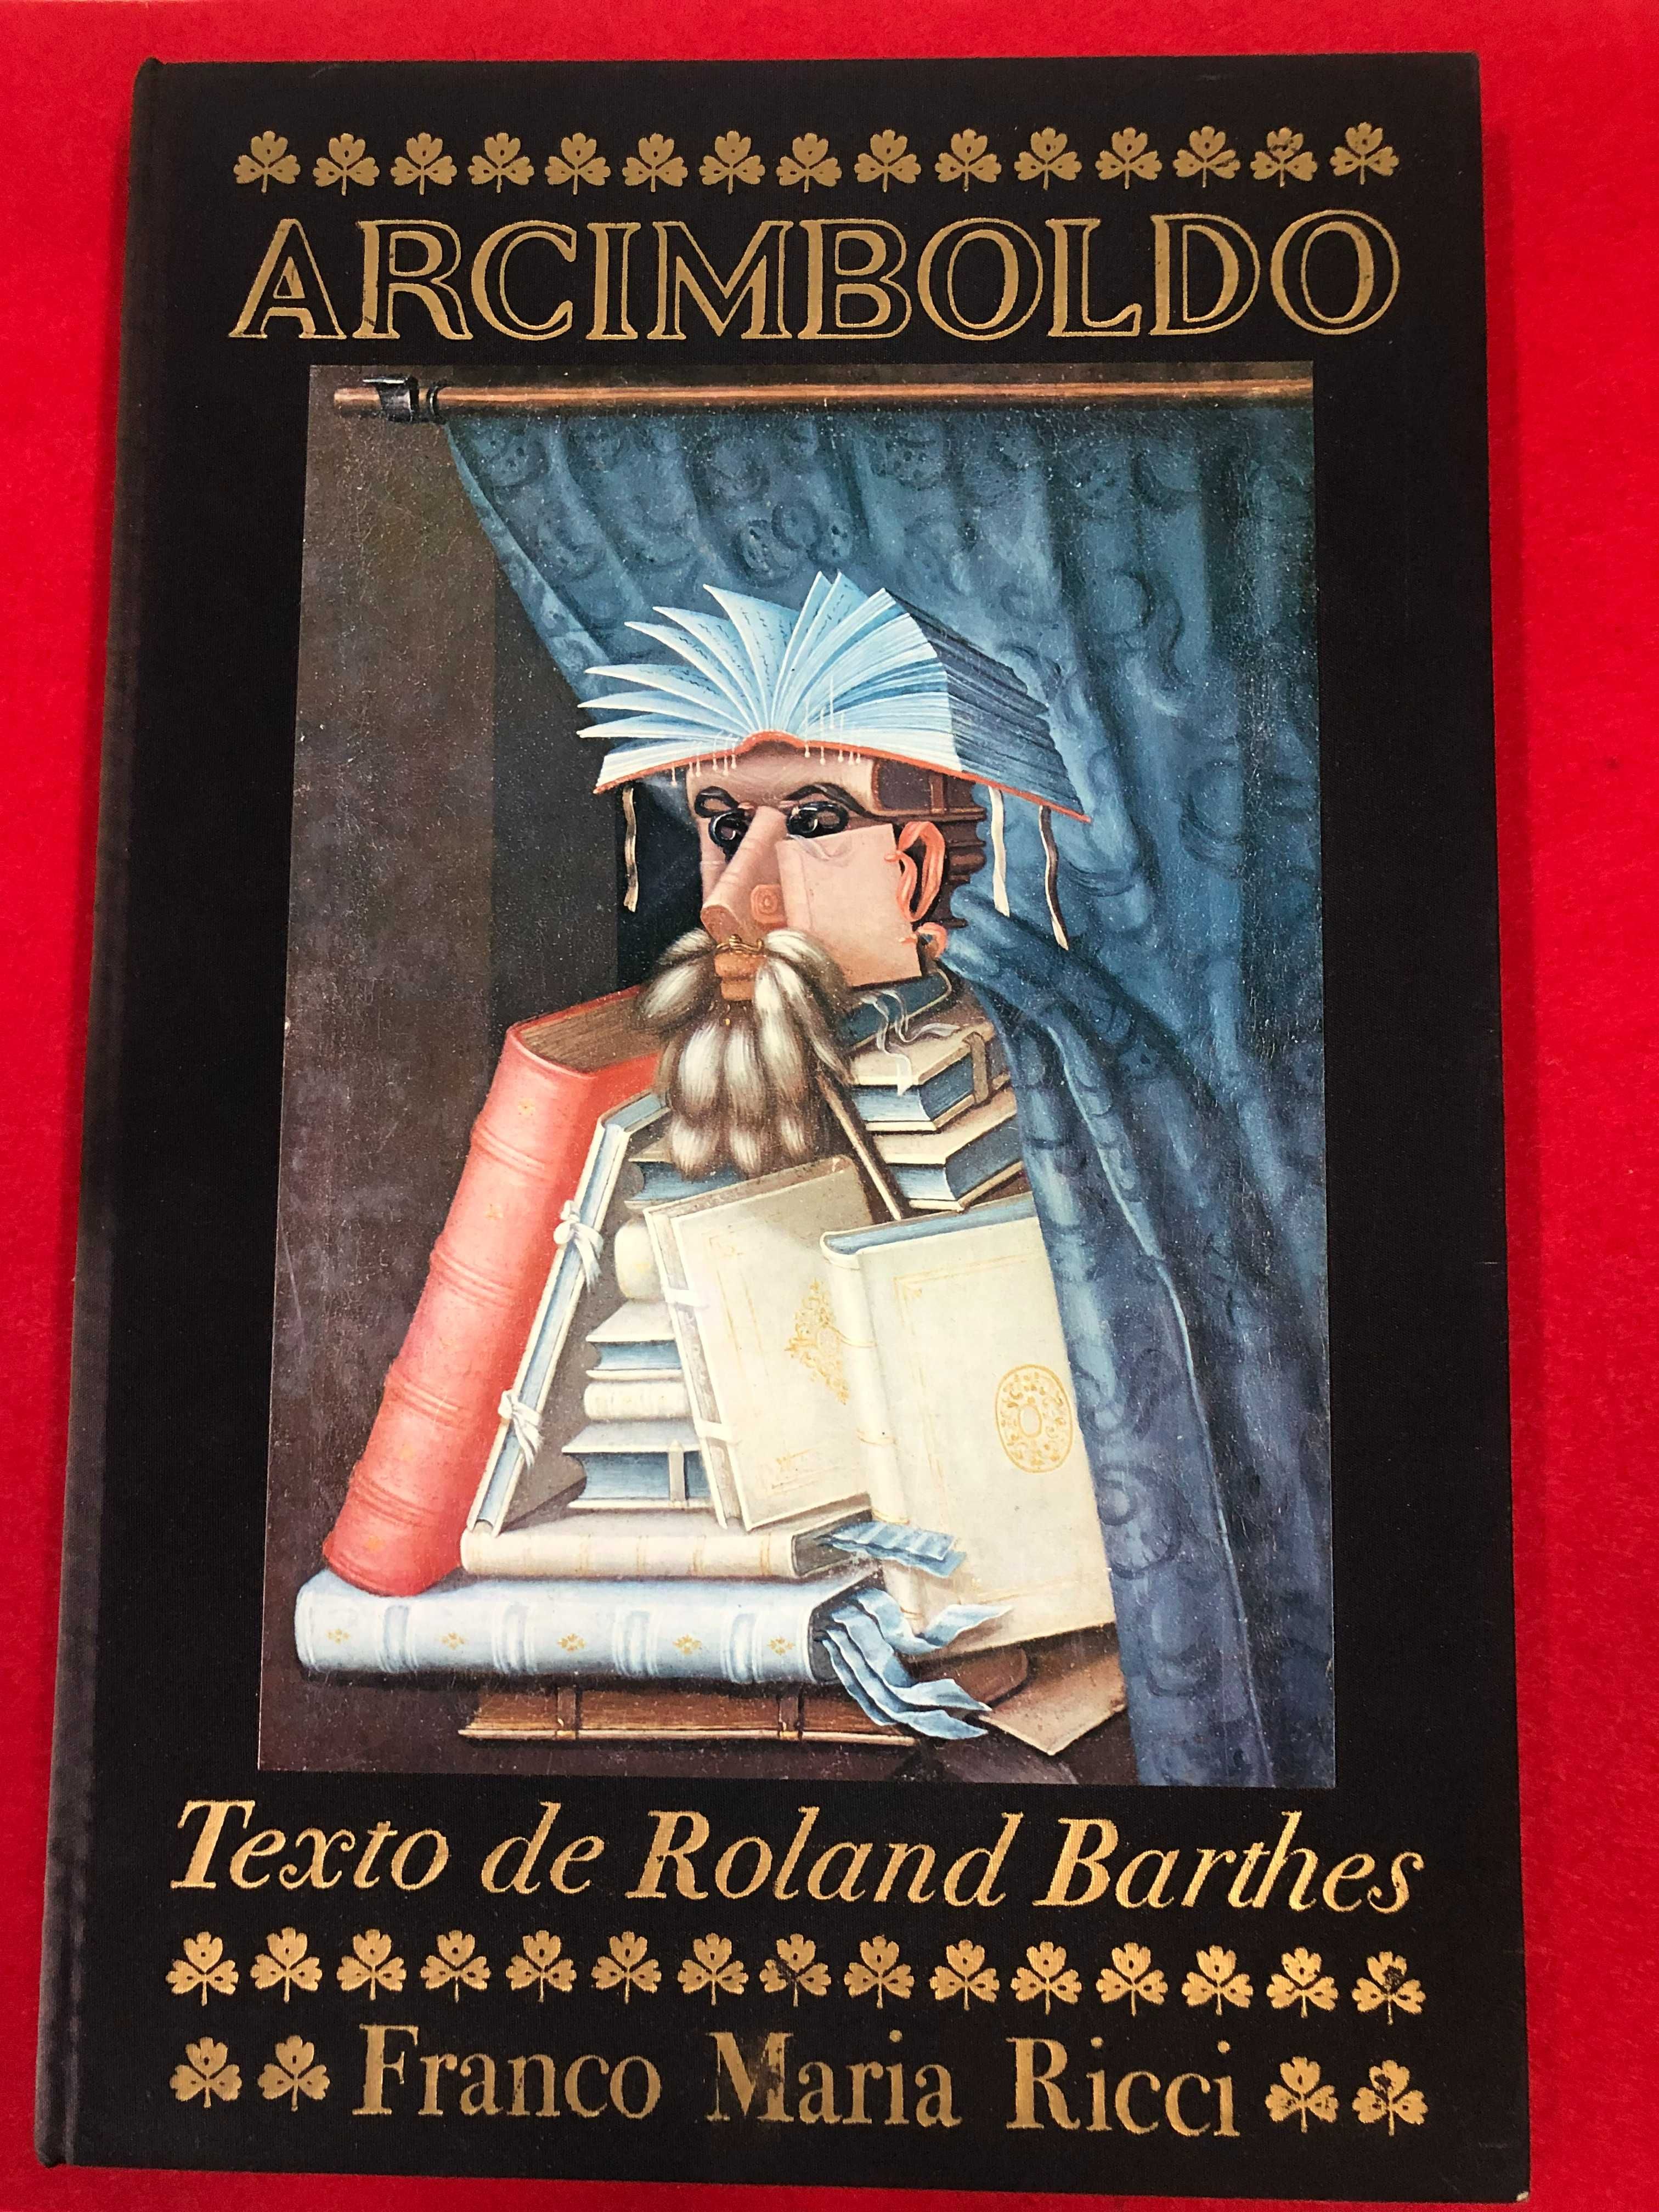 Arcimboldo - Roland Barthes - Franco Maria Ricci